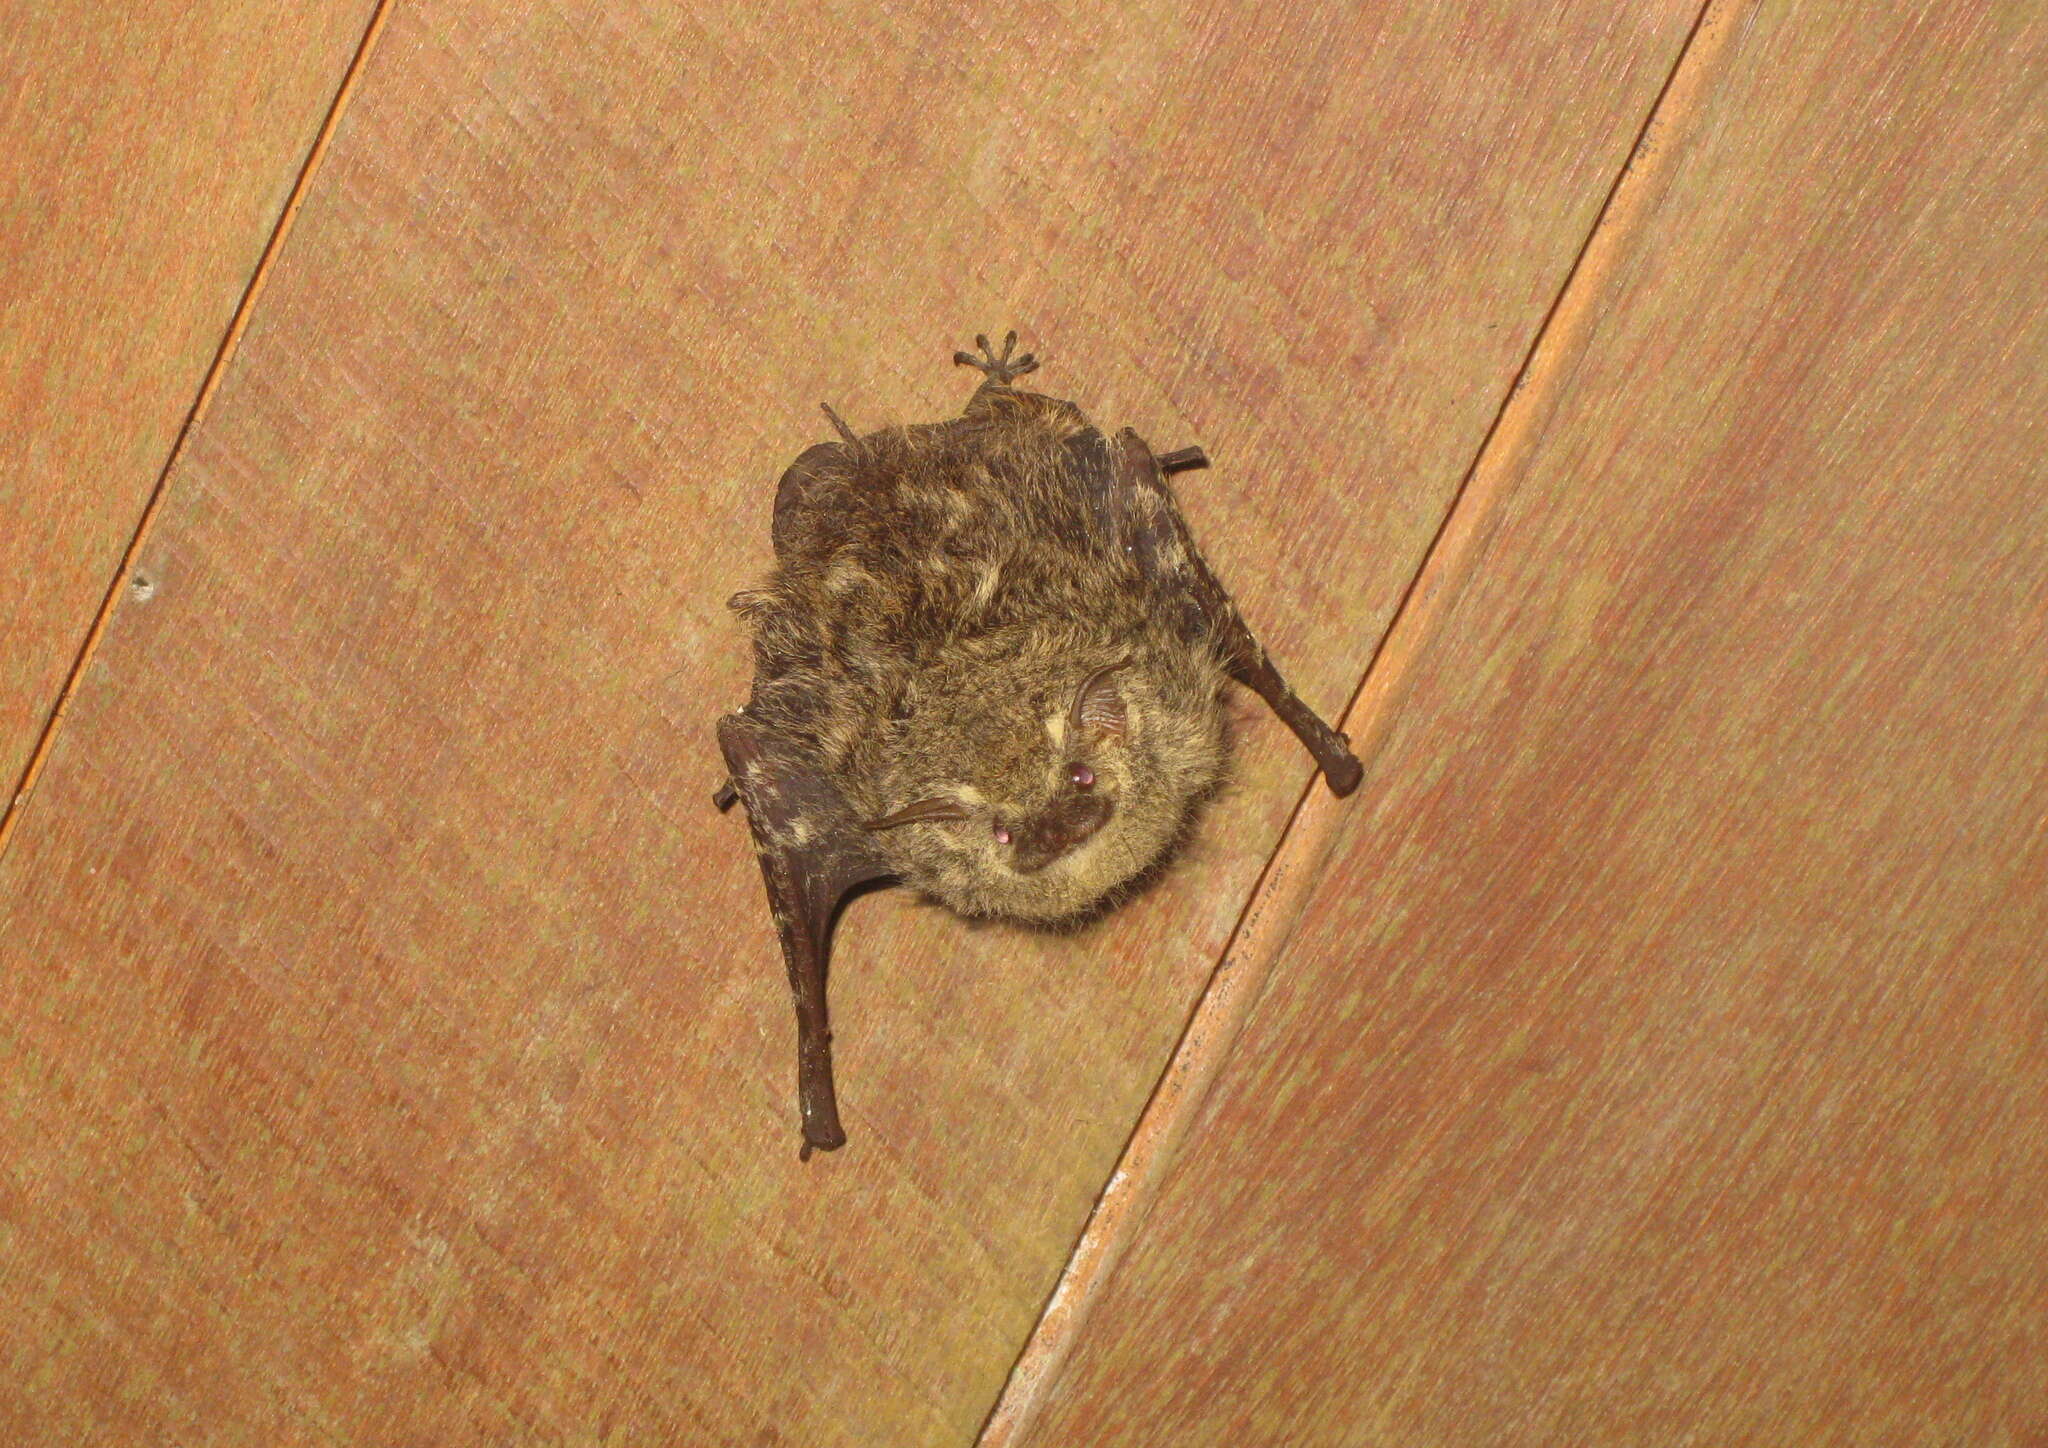 Image of proboscis bat